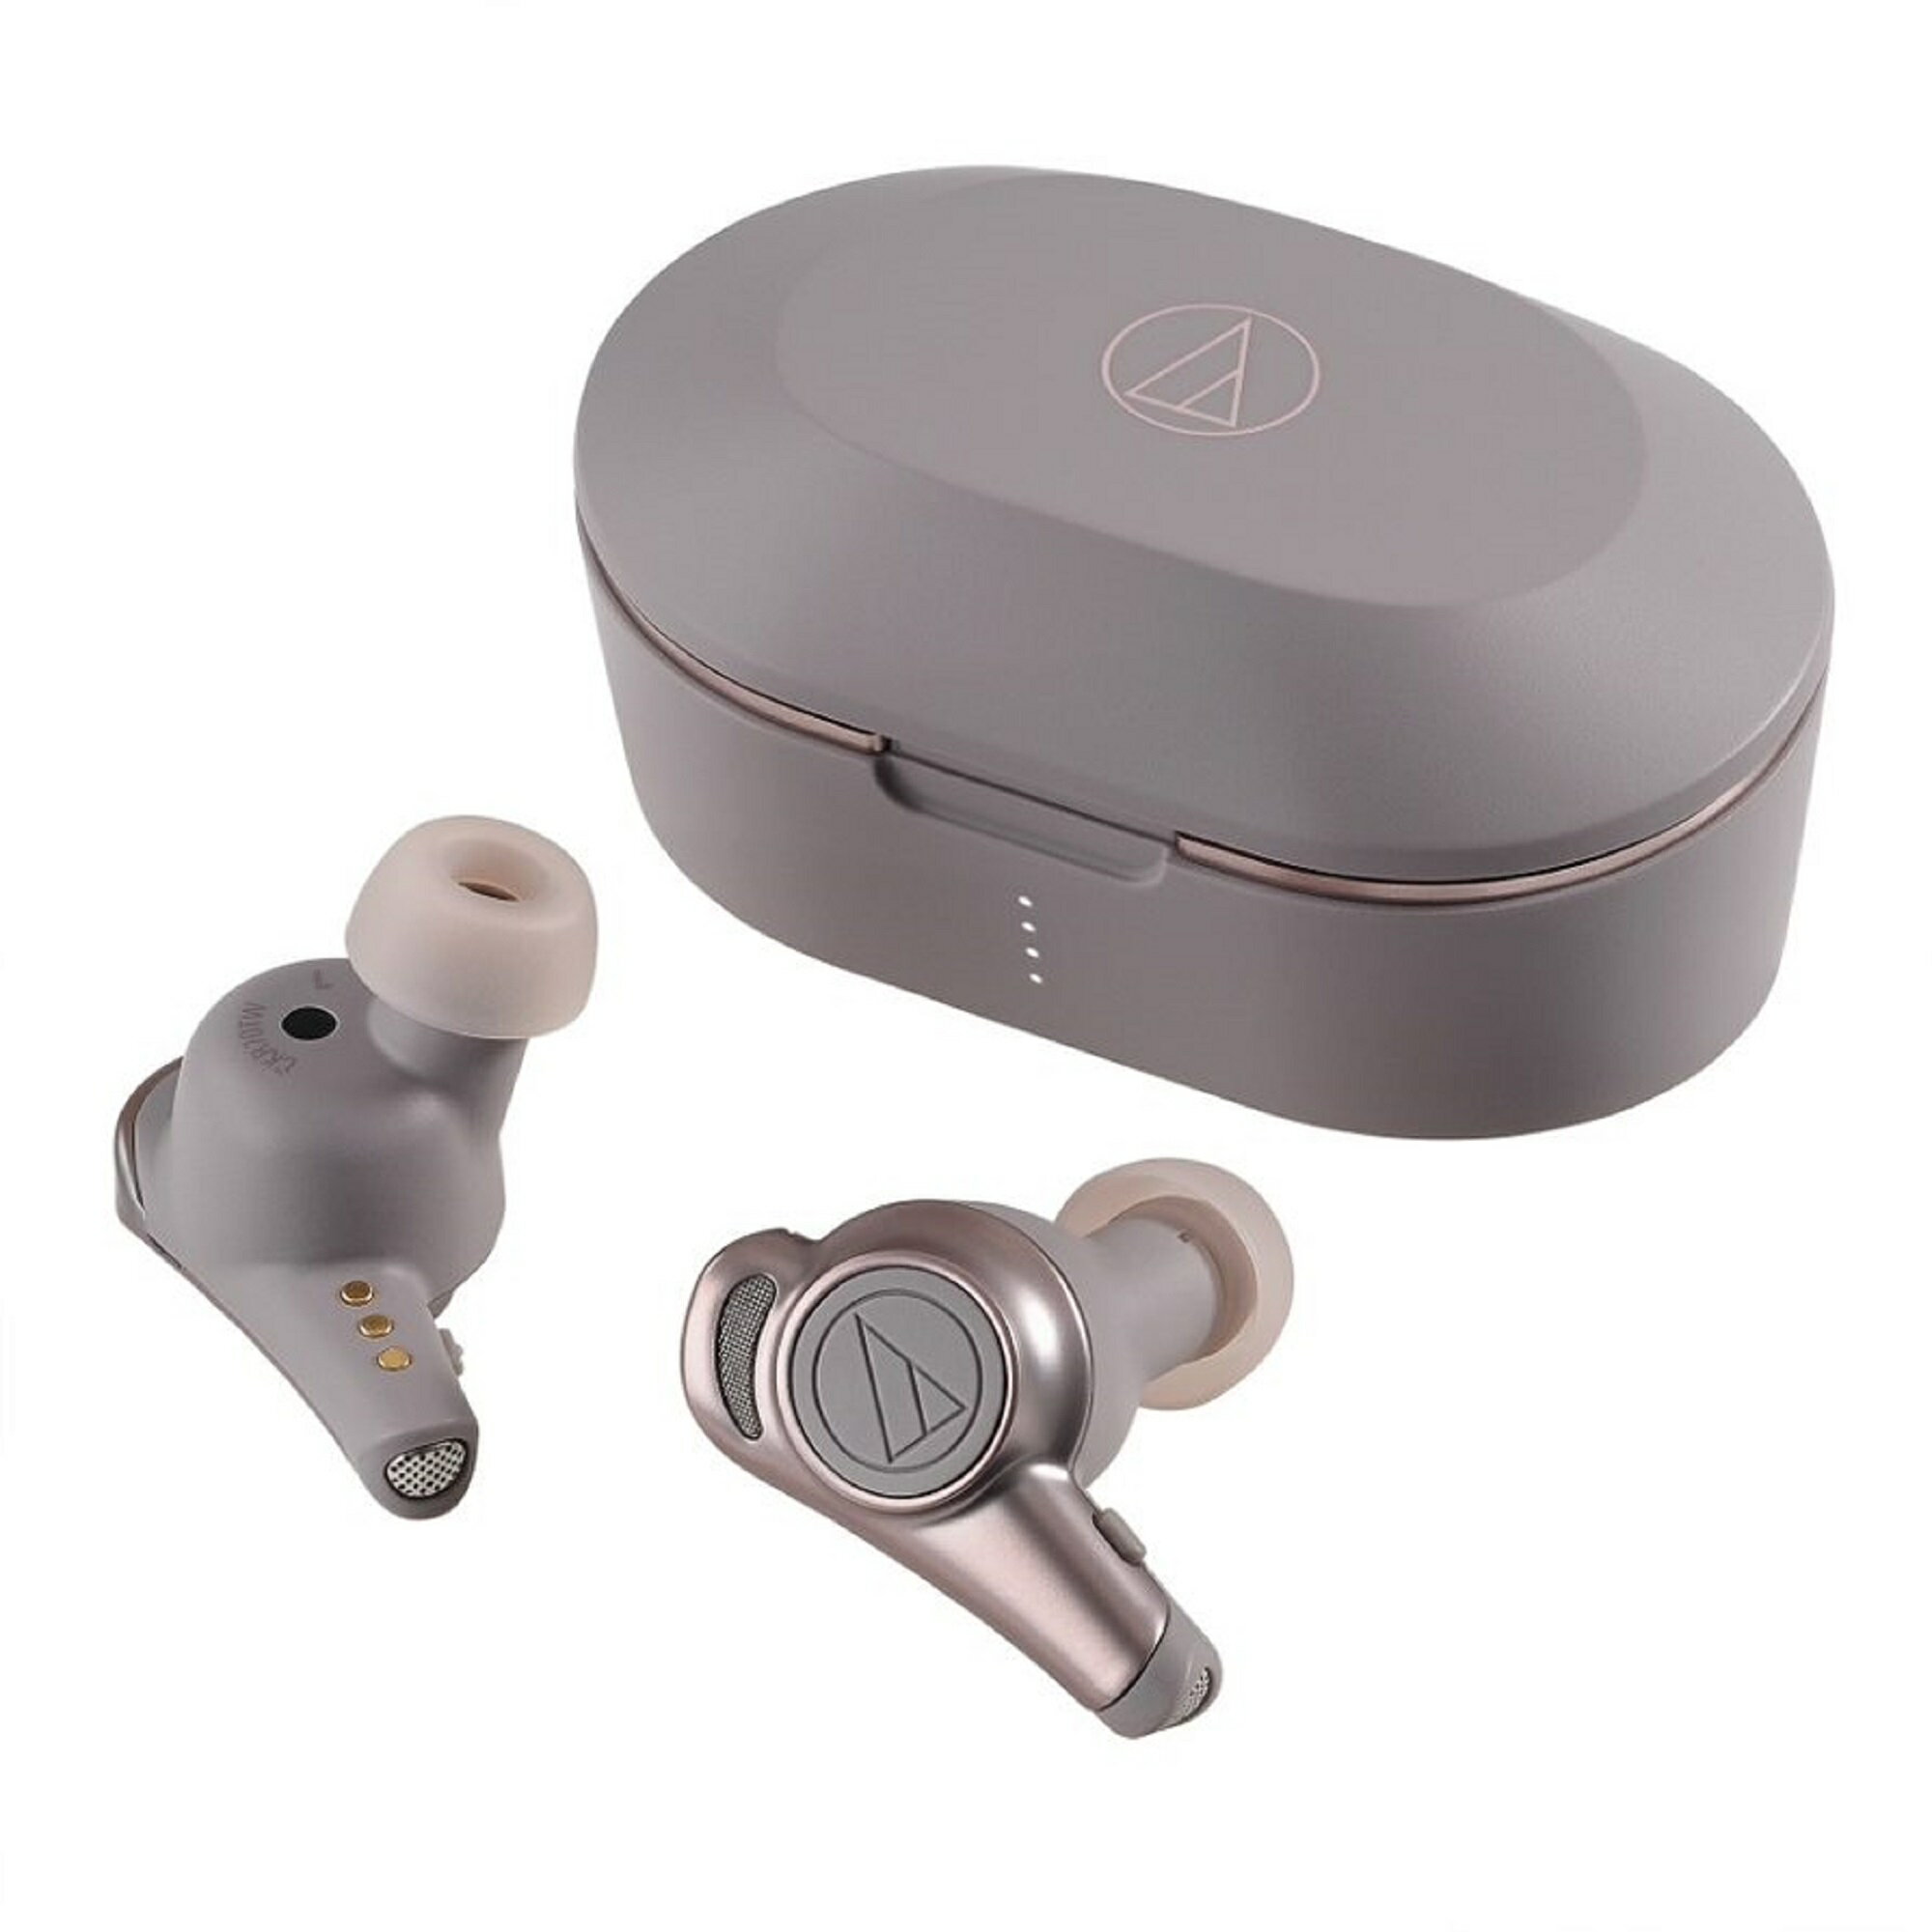 ATH-CKR70TW 完全ワイヤレス 独立型 Bluetooth 重低音 長時間再生 マイク付き ハンズフリー通話 ヒアスルー機能 片耳通話可能 音声アシスタント対応 安定接続 防滴 ゲーム テレワーク